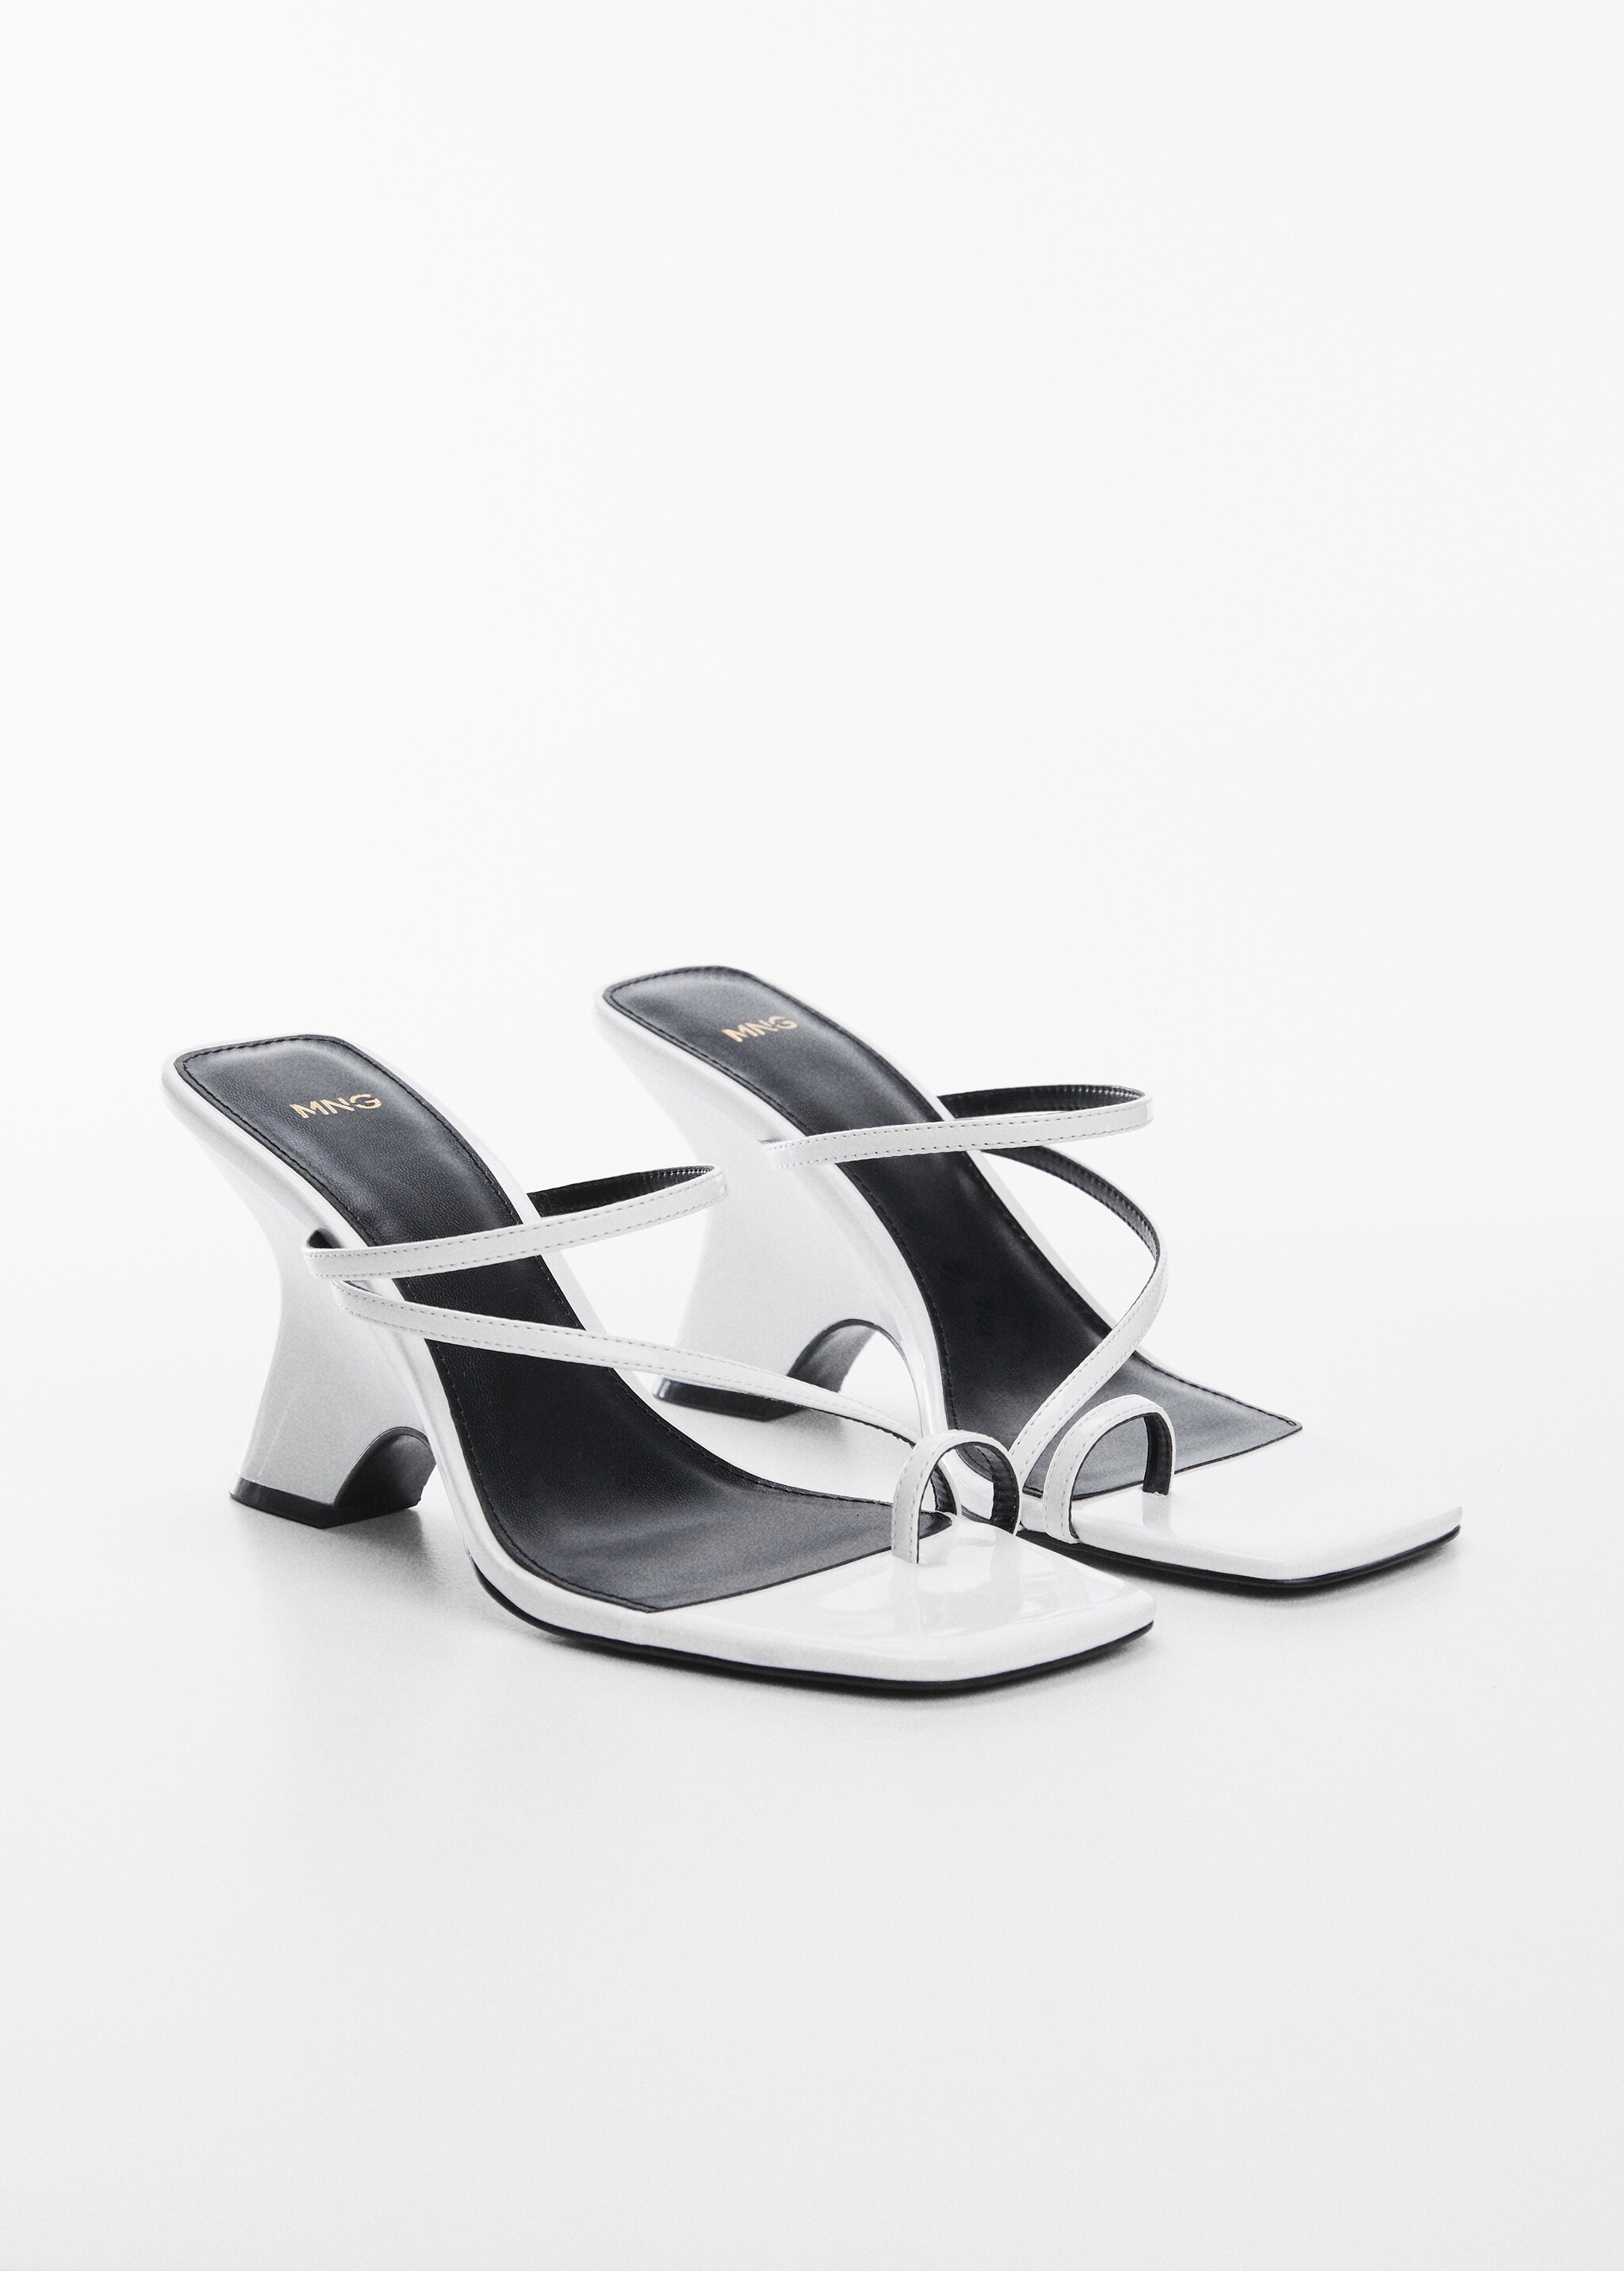 Asymmetrical heeled sandals - Medium plane